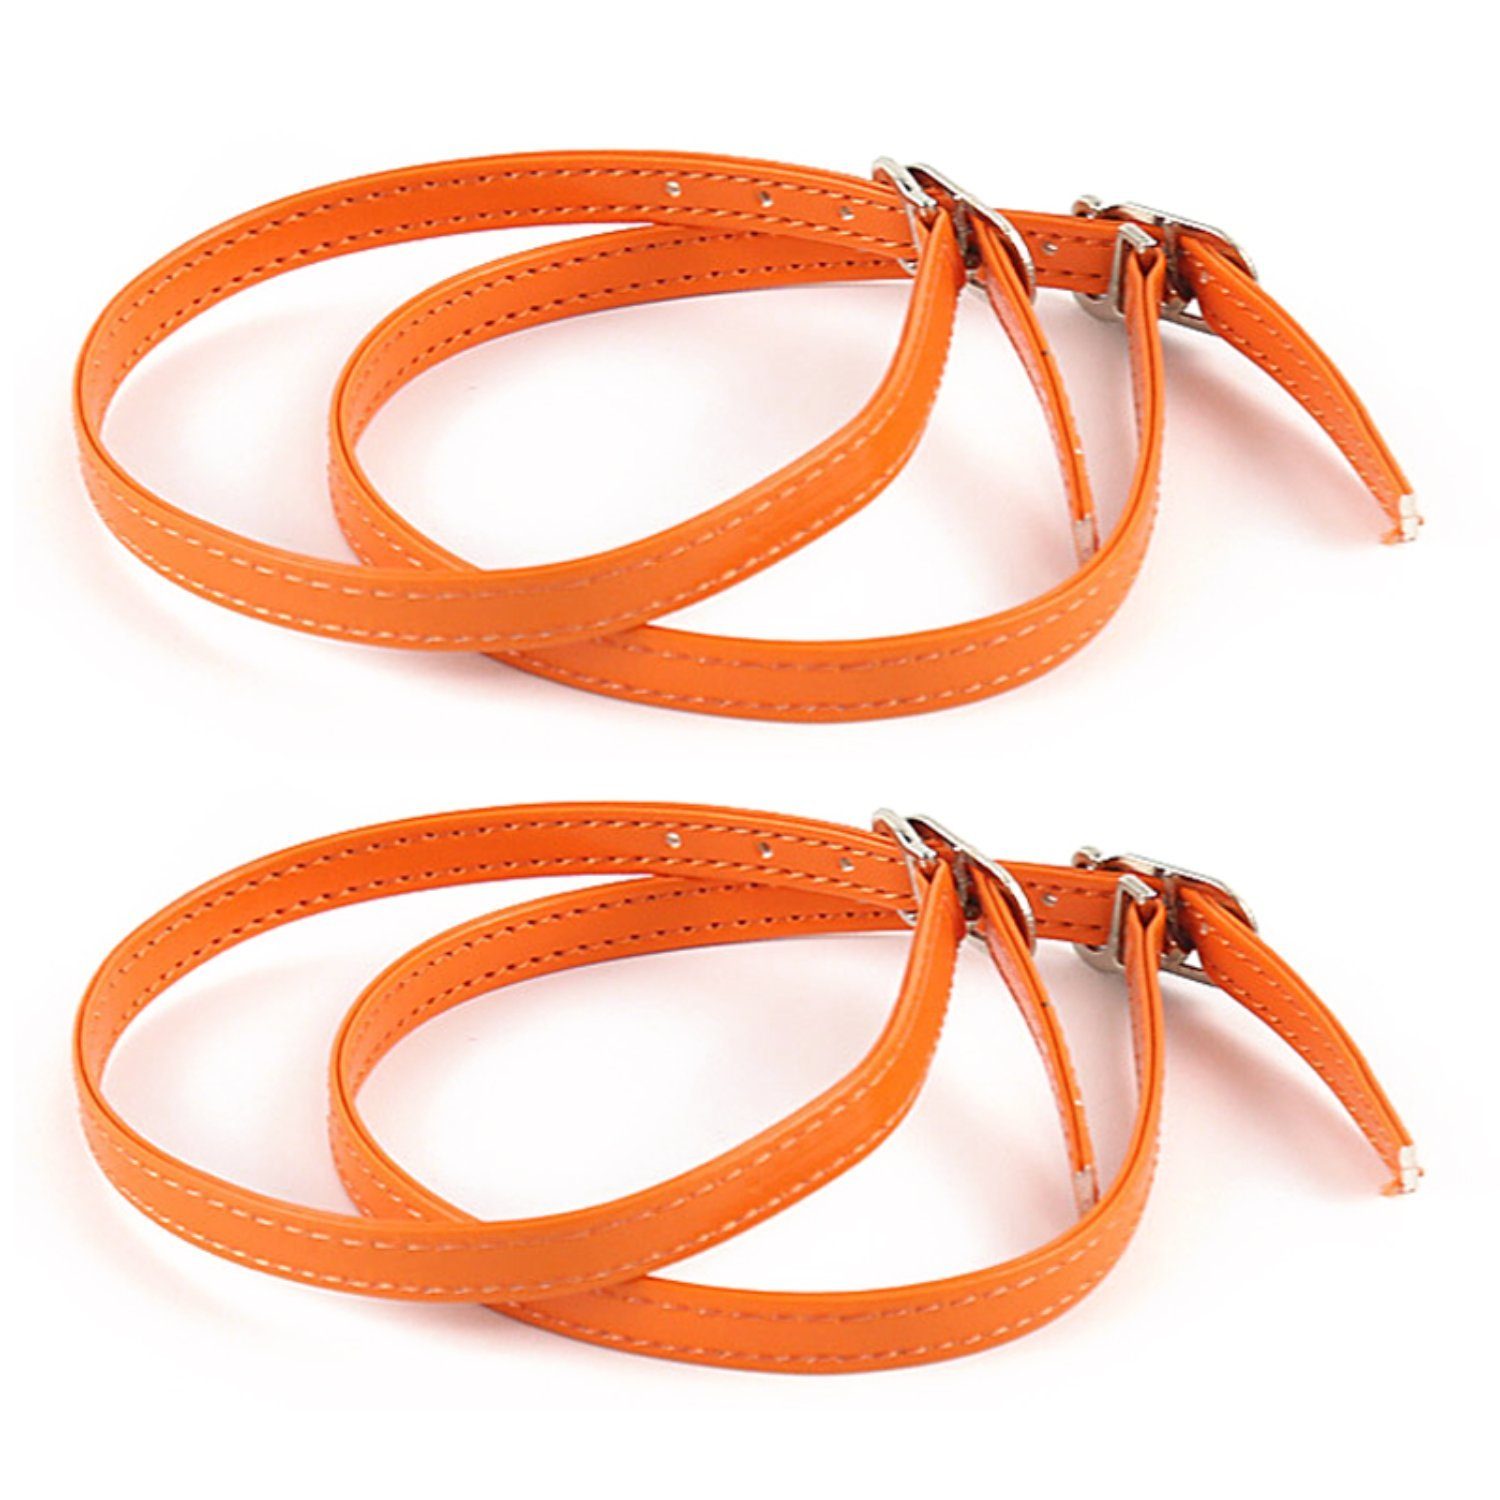 Daisred Schnürsenkel 2 Paar Damen Bootsschuhriemen Shoe Laces with Buckle Orange